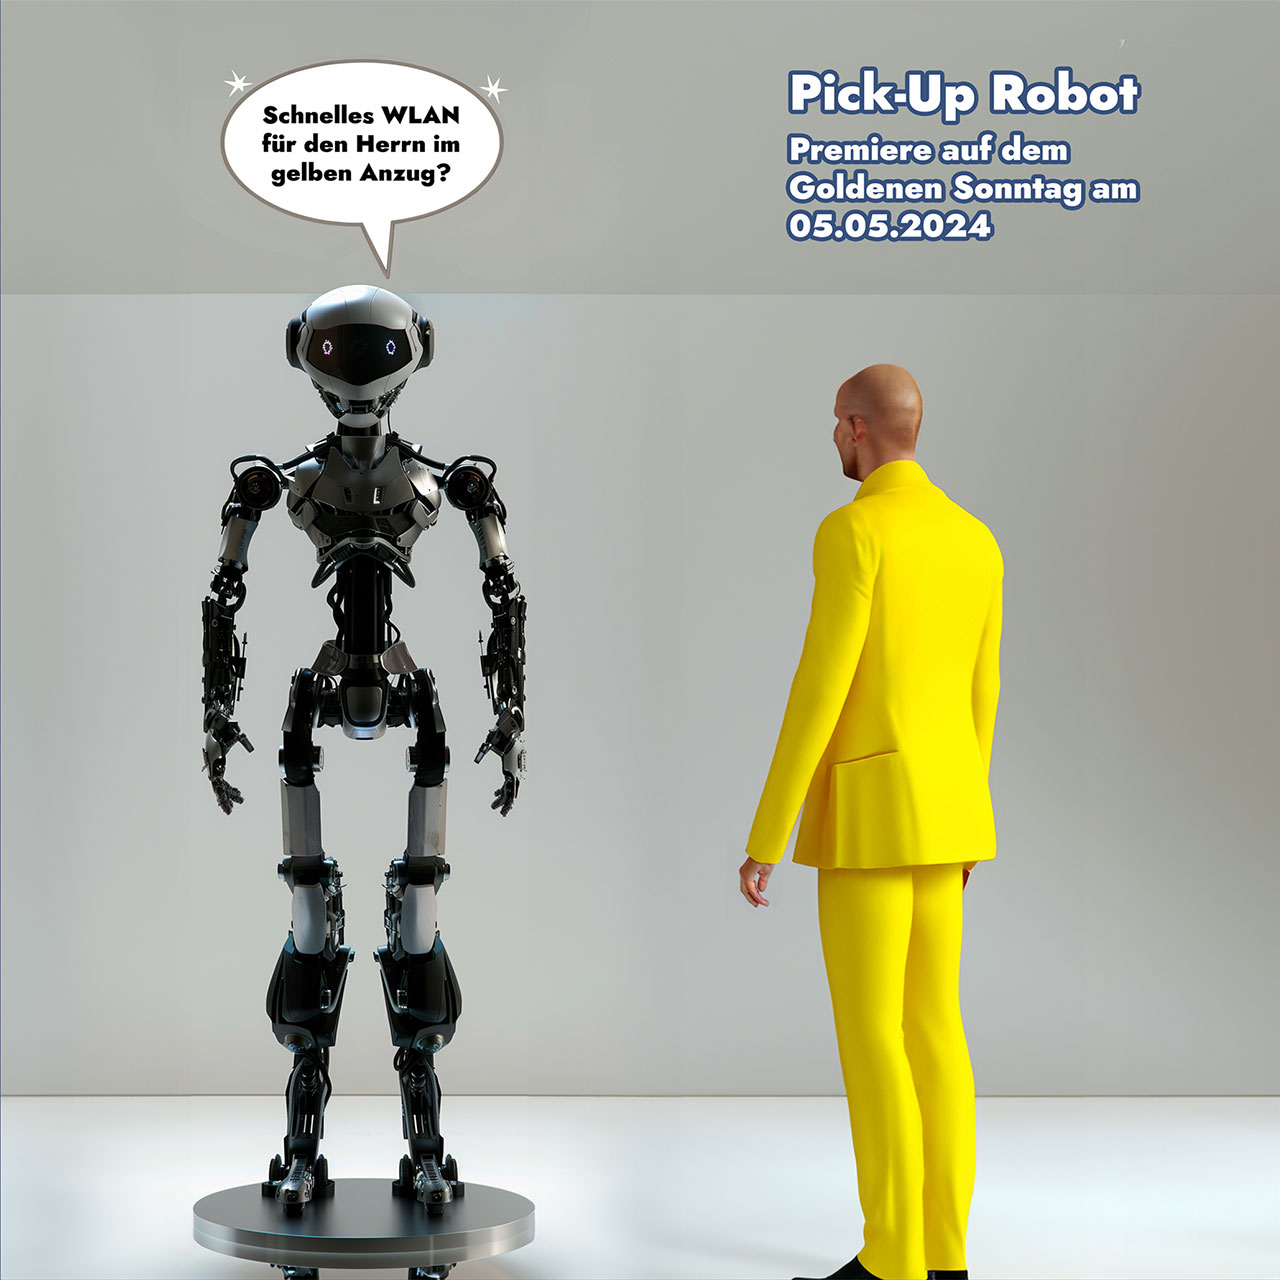 Pick-Up Robot